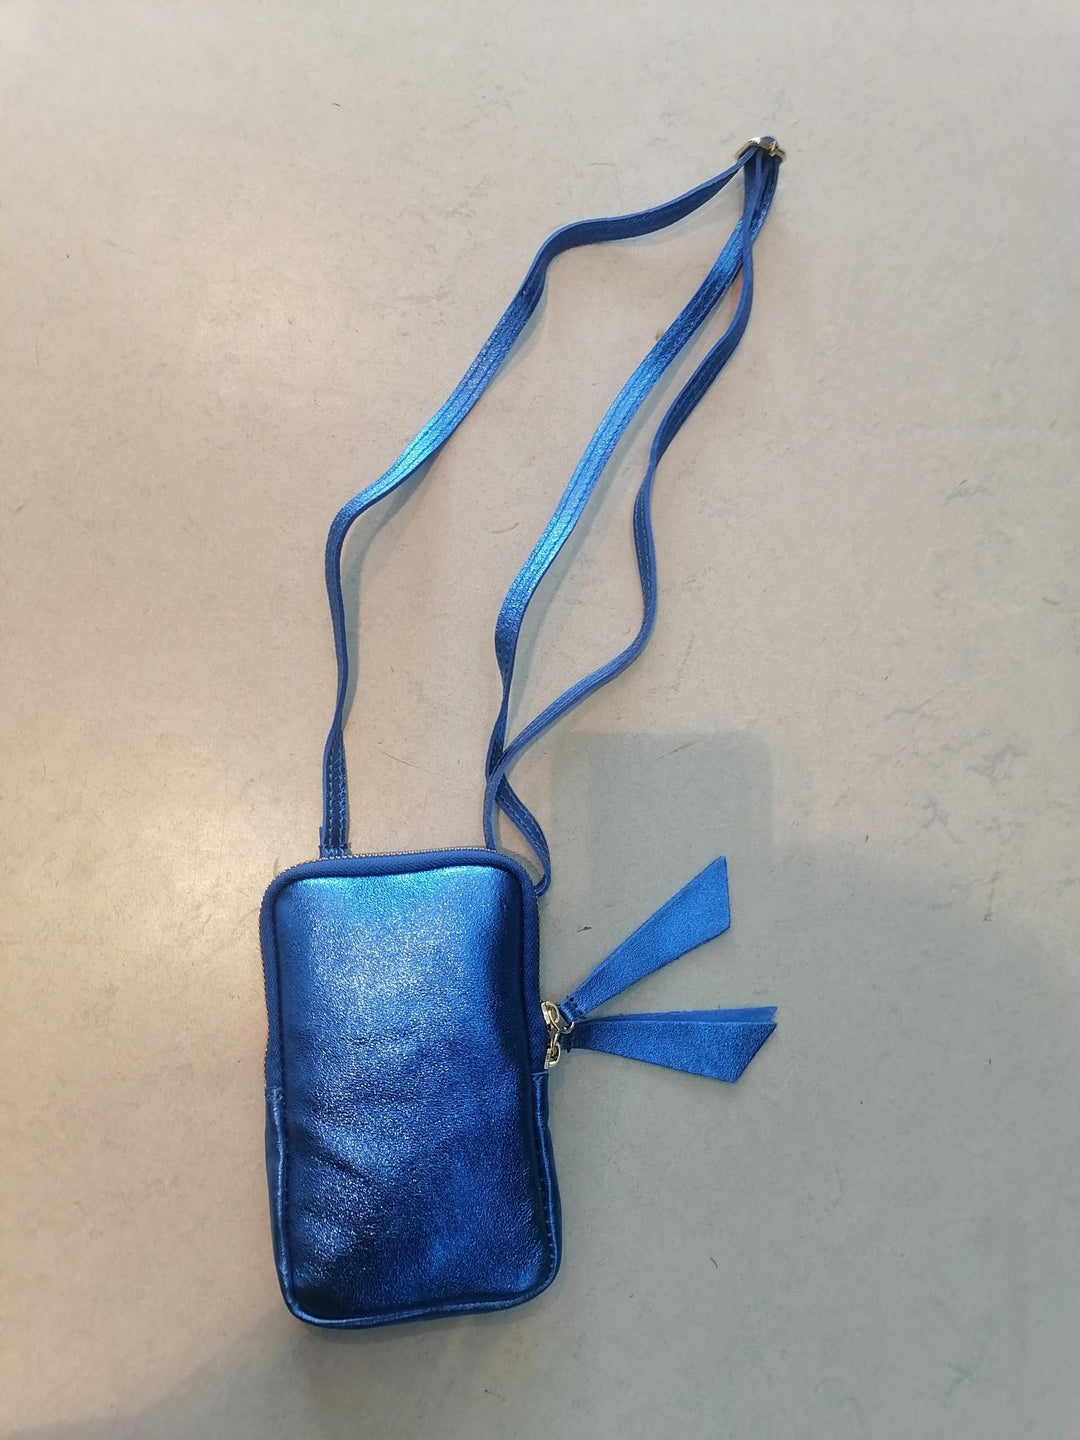 Mini blauwe metallic crossbody tas van leder - axent - ITA003-shiny-blauw - grote maten - dameskleding - kledingwinkel - herent - leuven